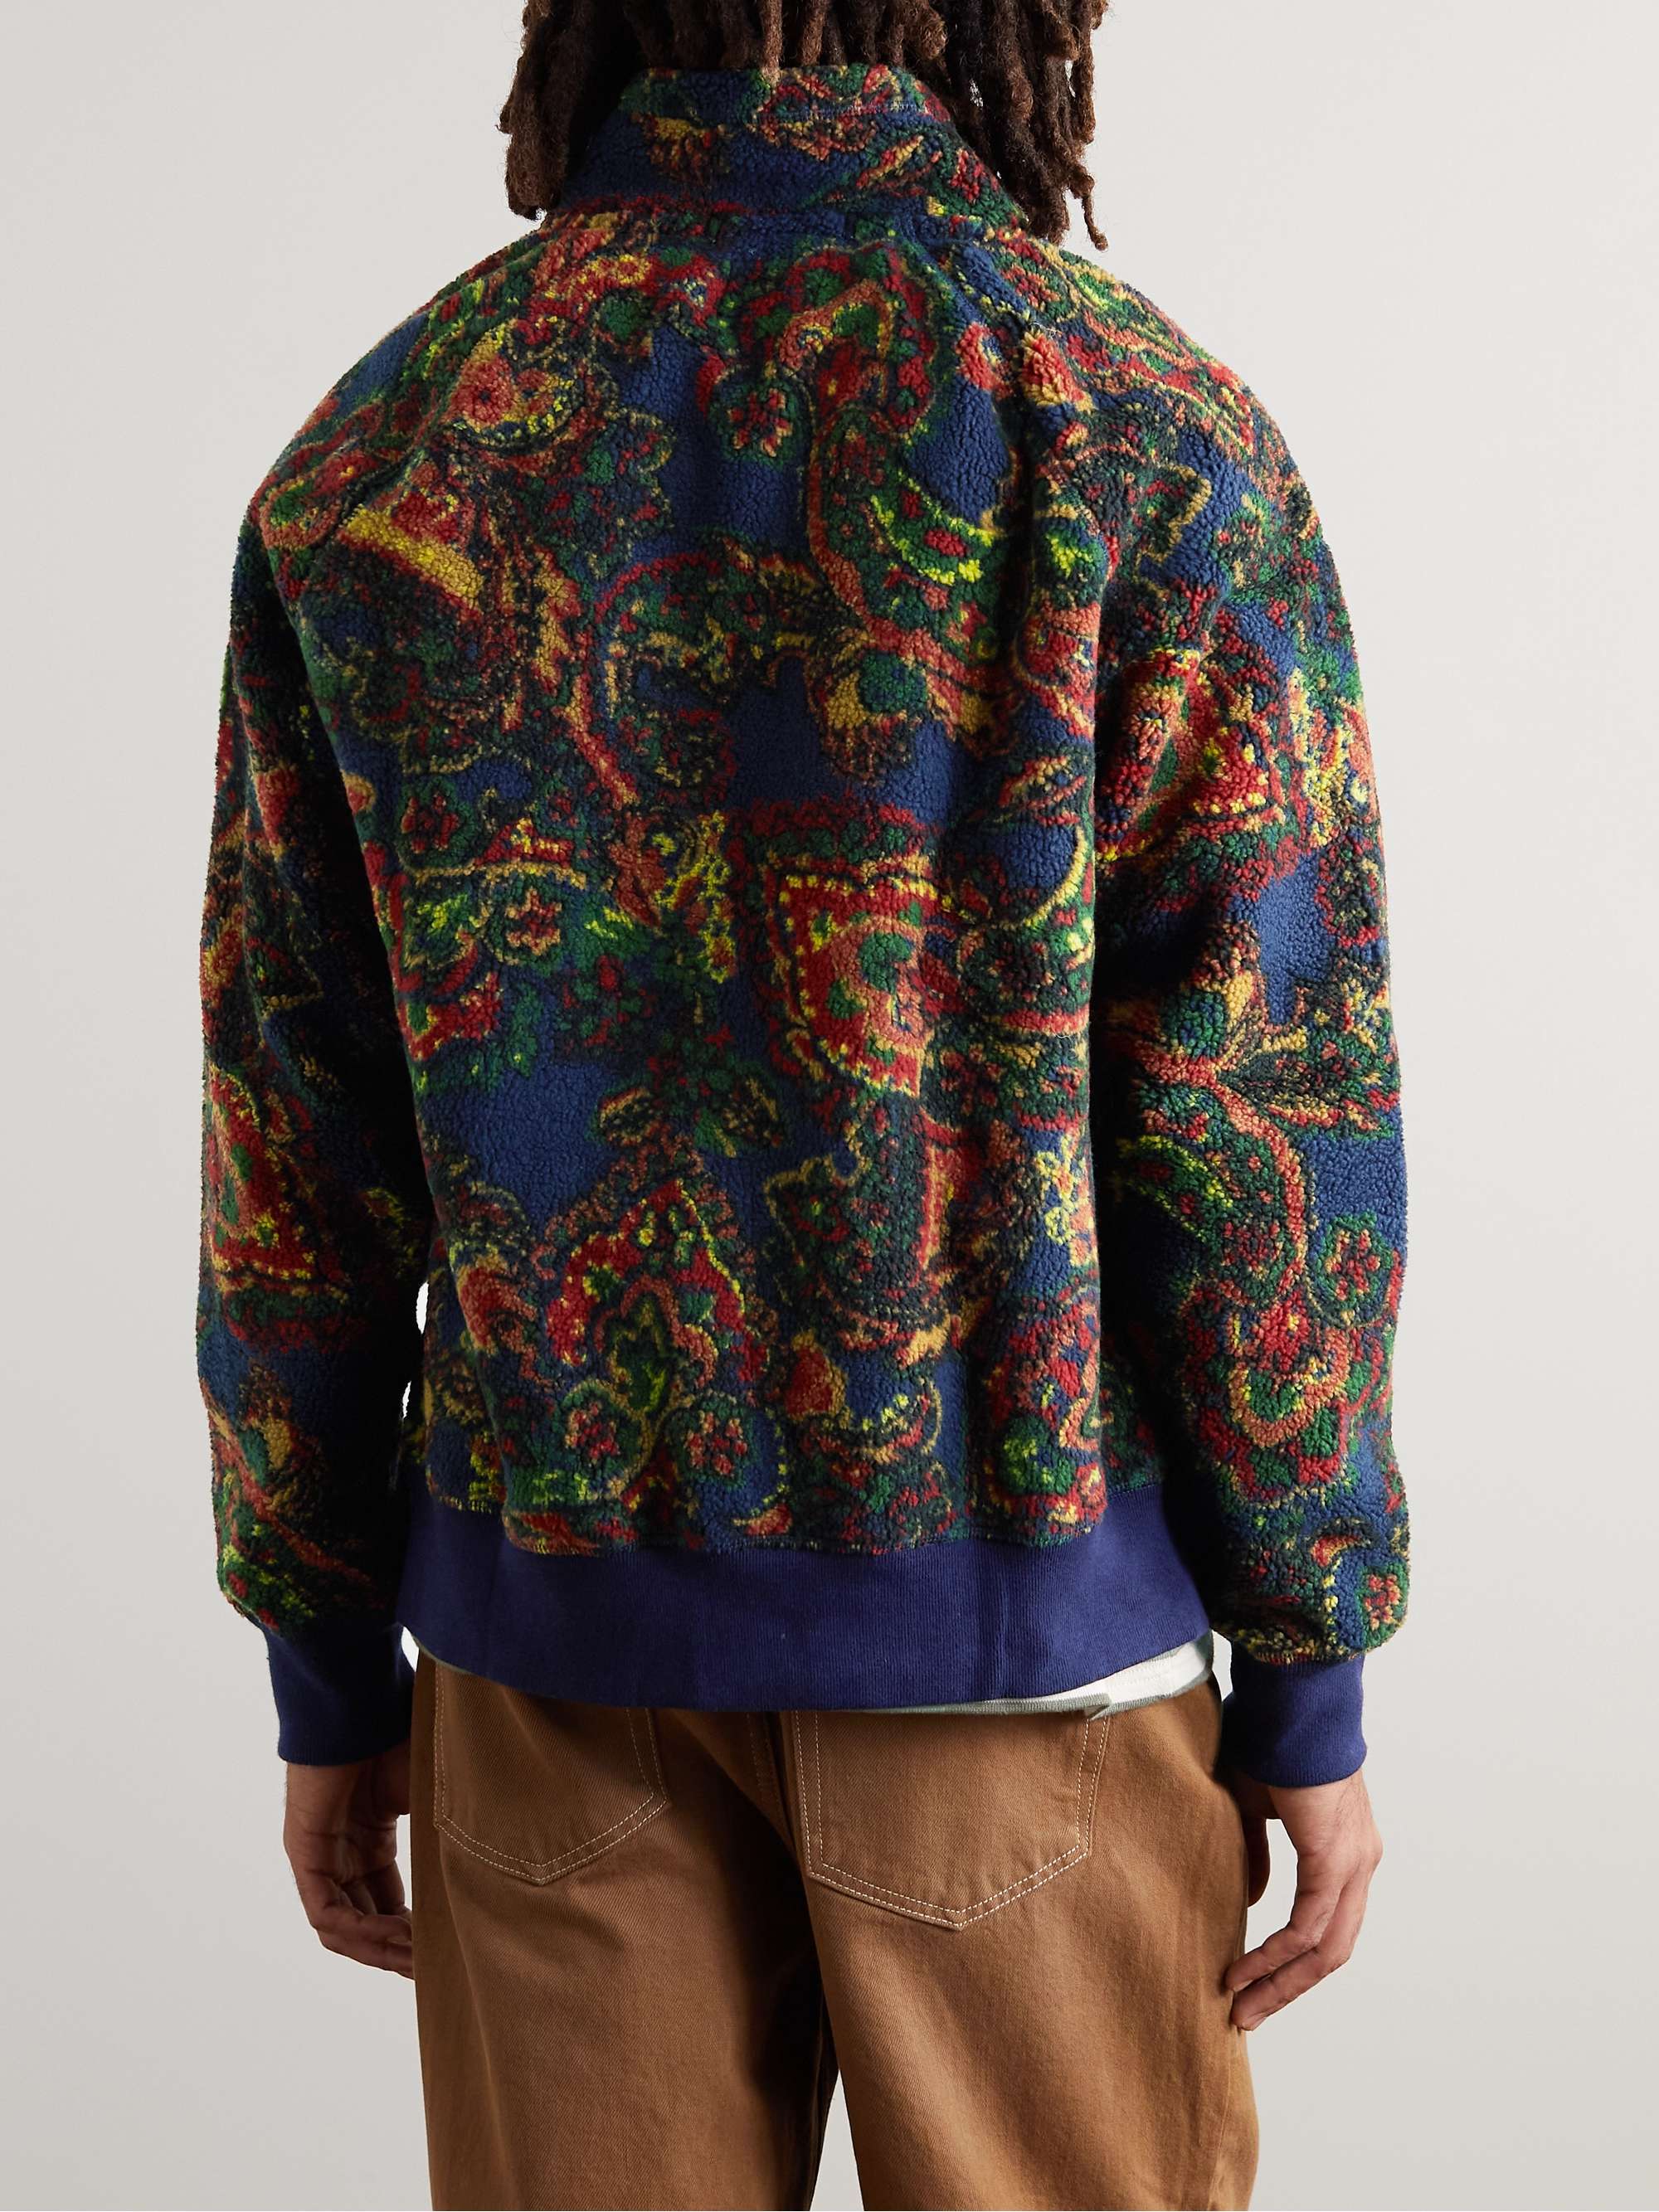 J.CREW Paisley-Print Fleece Jacket for Men | MR PORTER